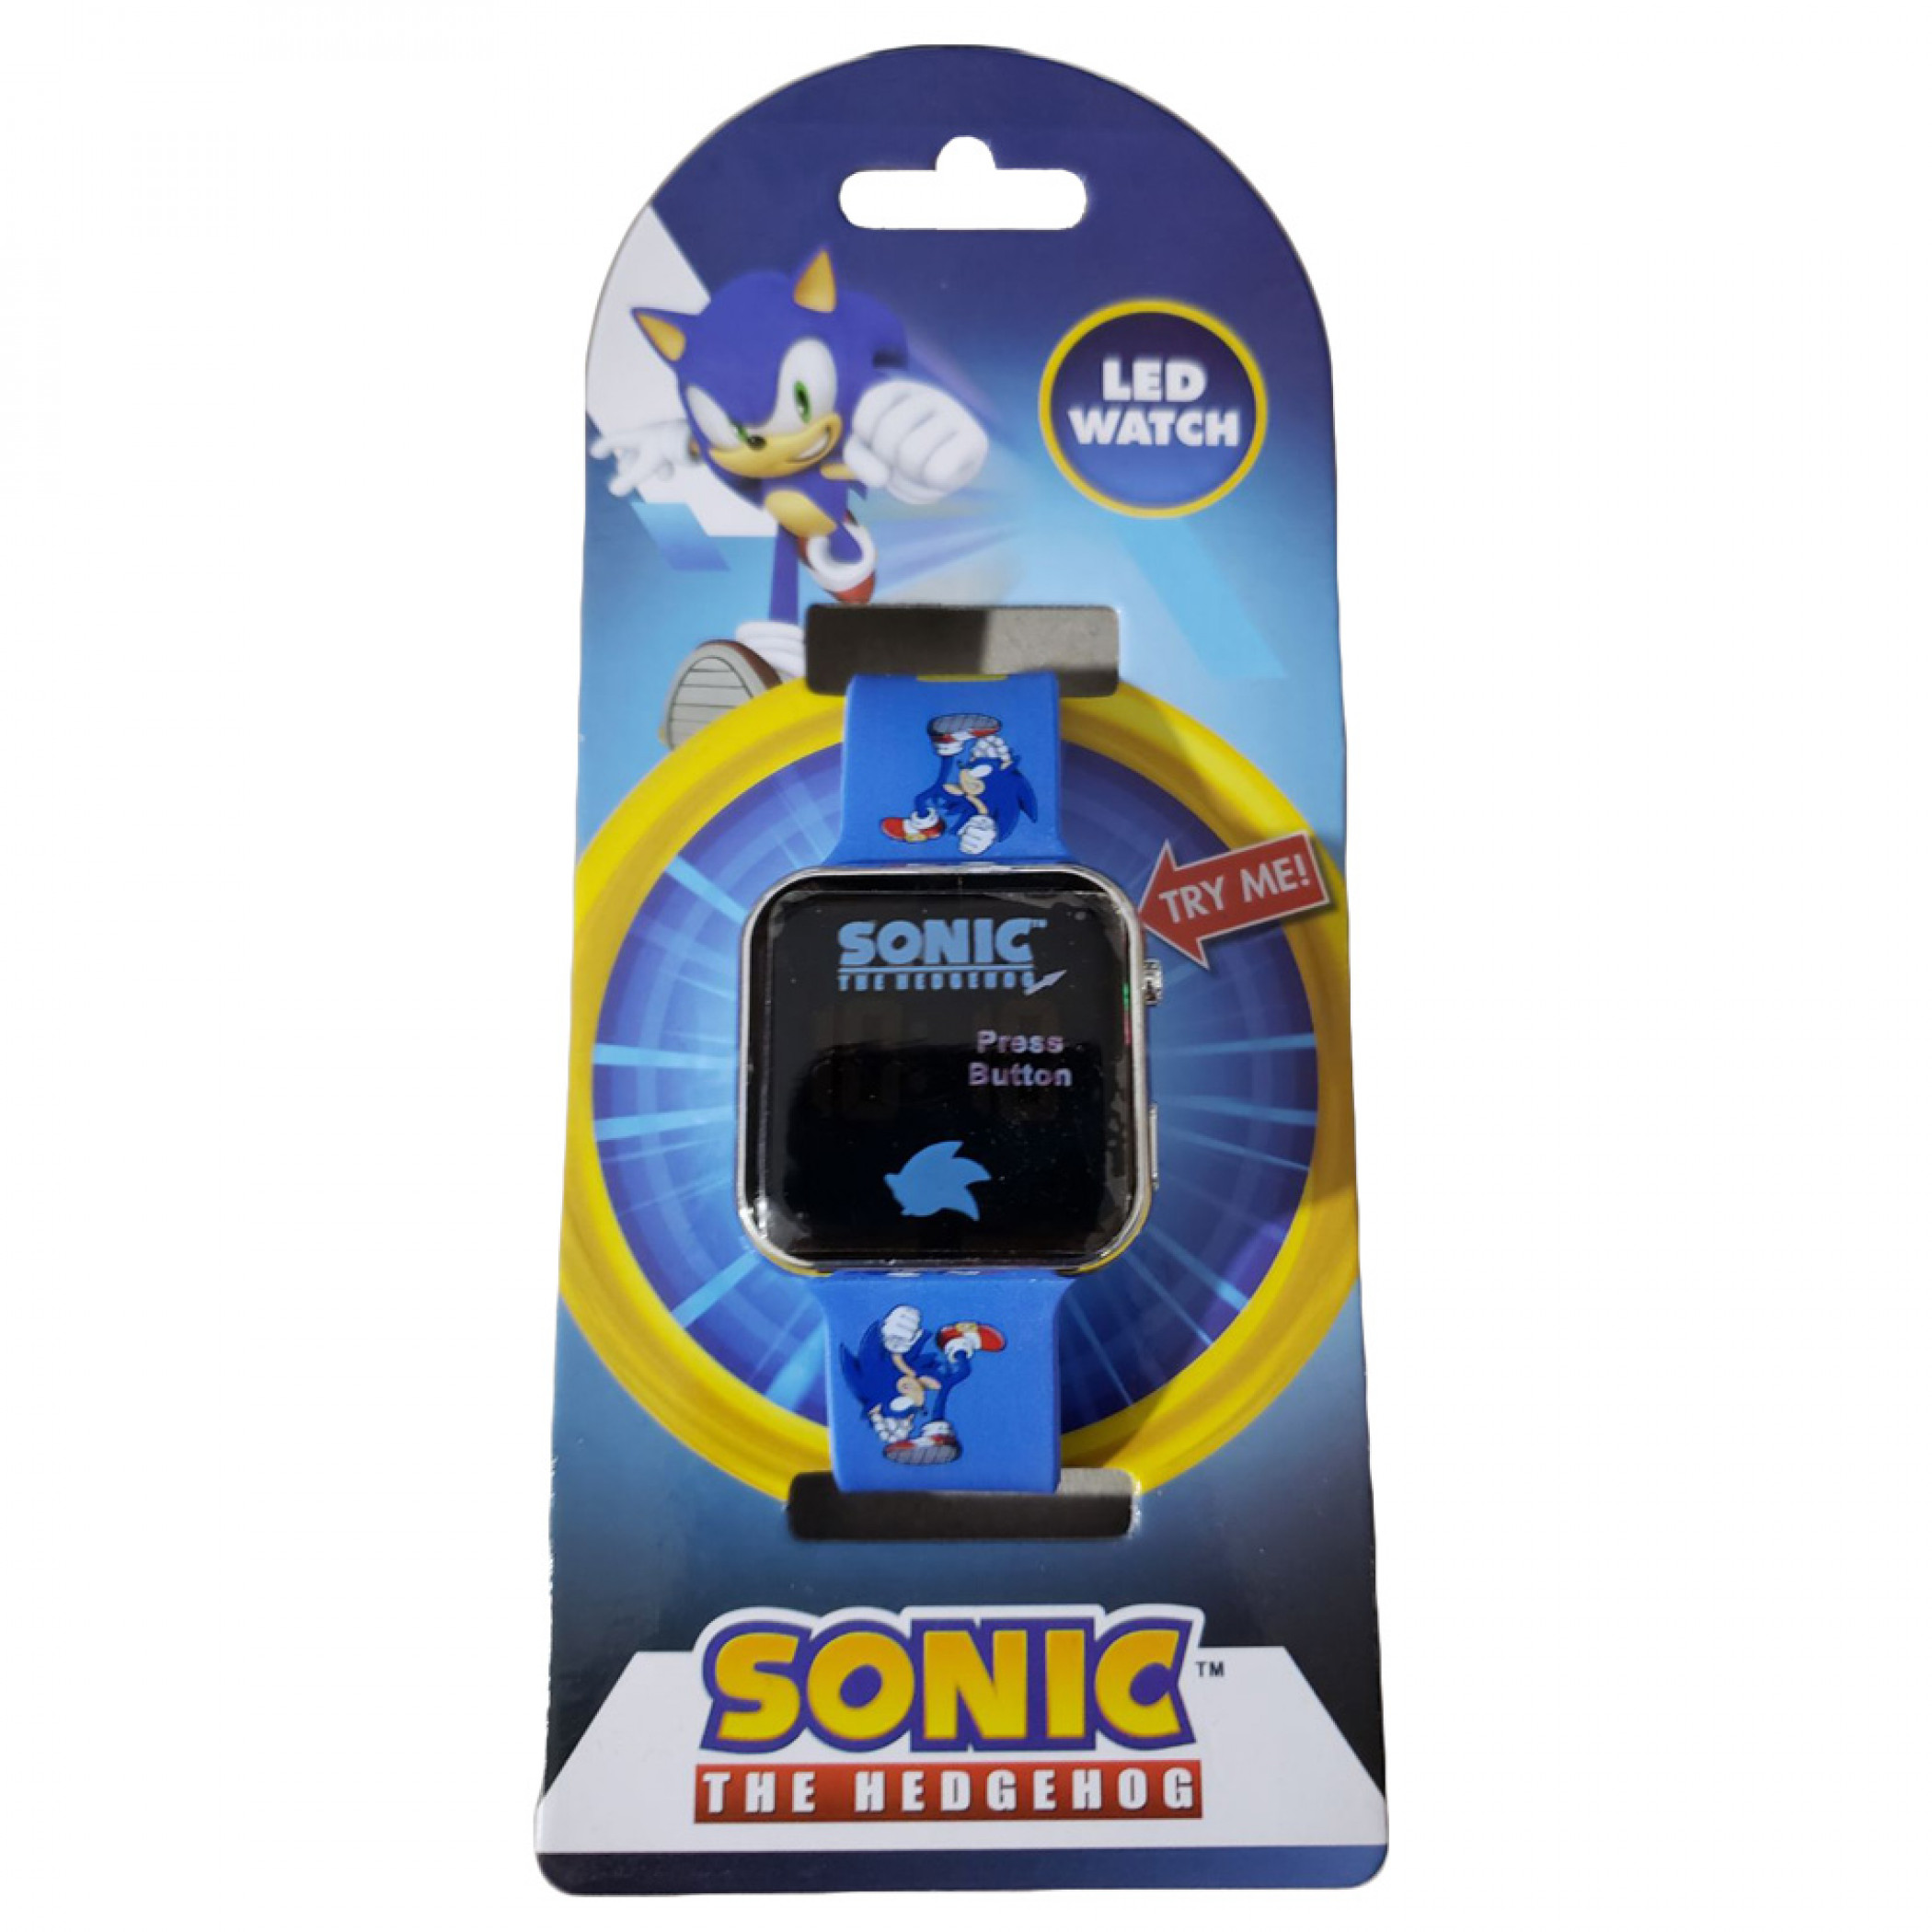 Sonic the Hedgehog Digital Watch w/ 16bit Character Rubber Strap